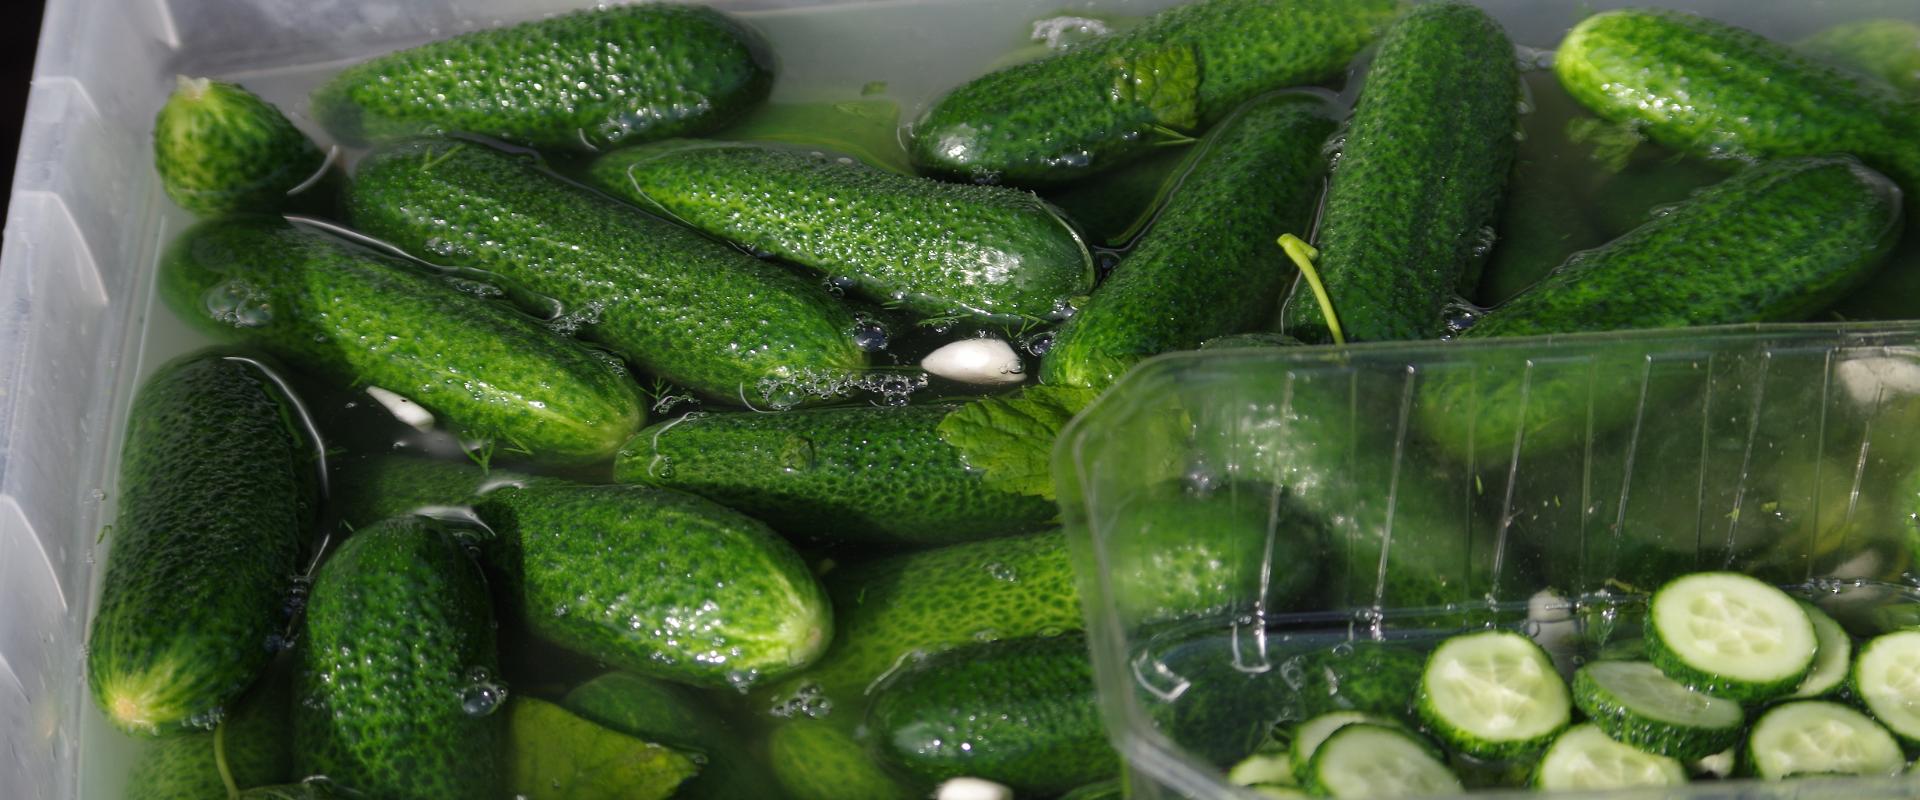 Tartu Market, fresh pickles